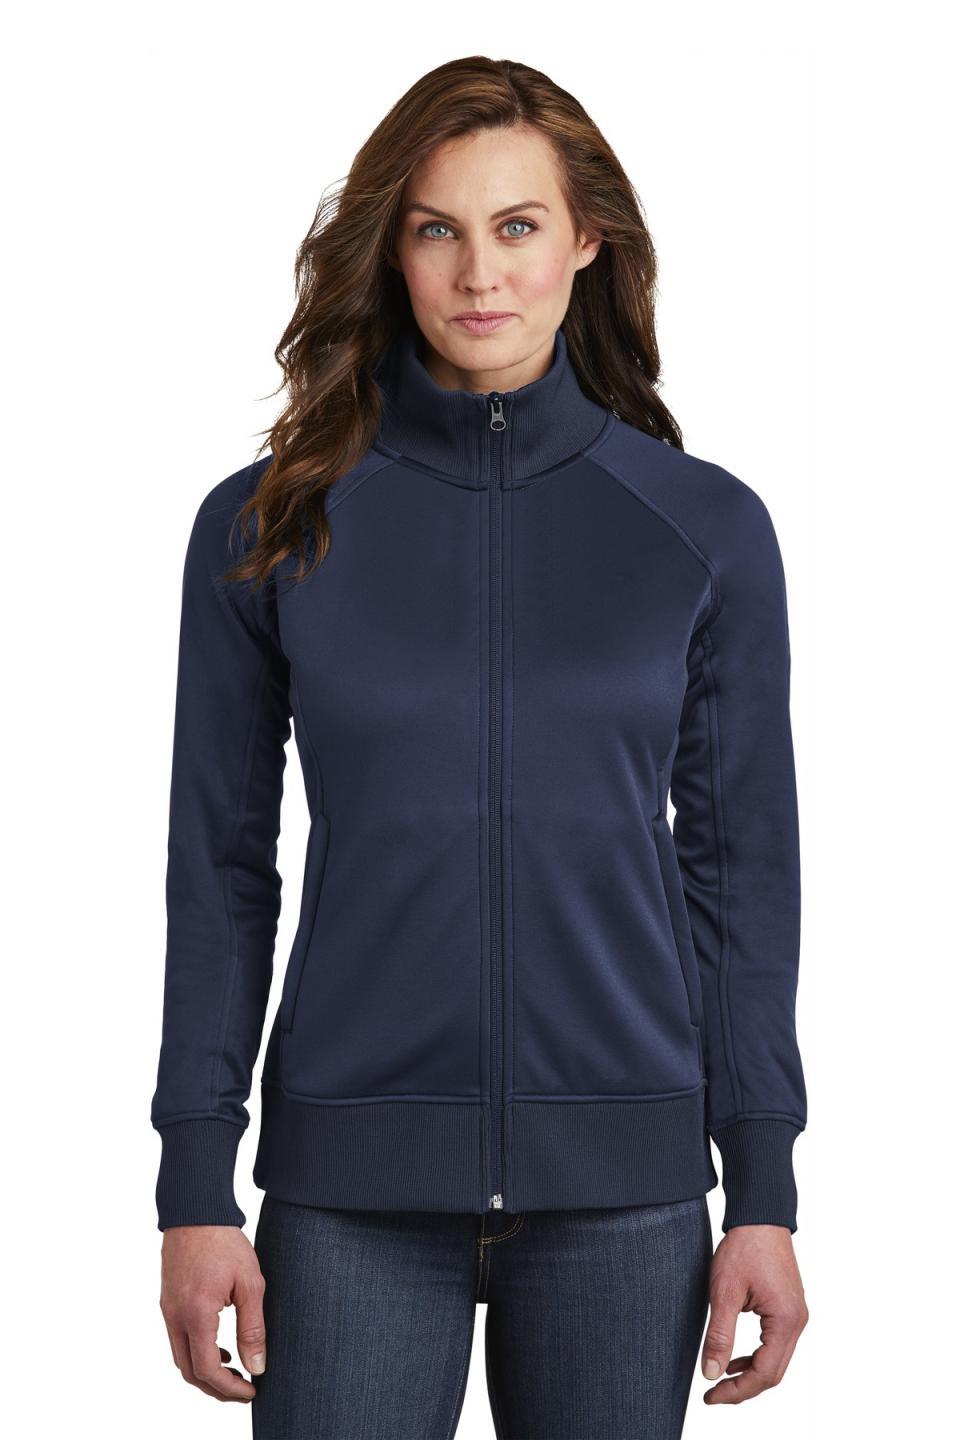 The North Face Women's Tech Full-Zip Fleece Jacket